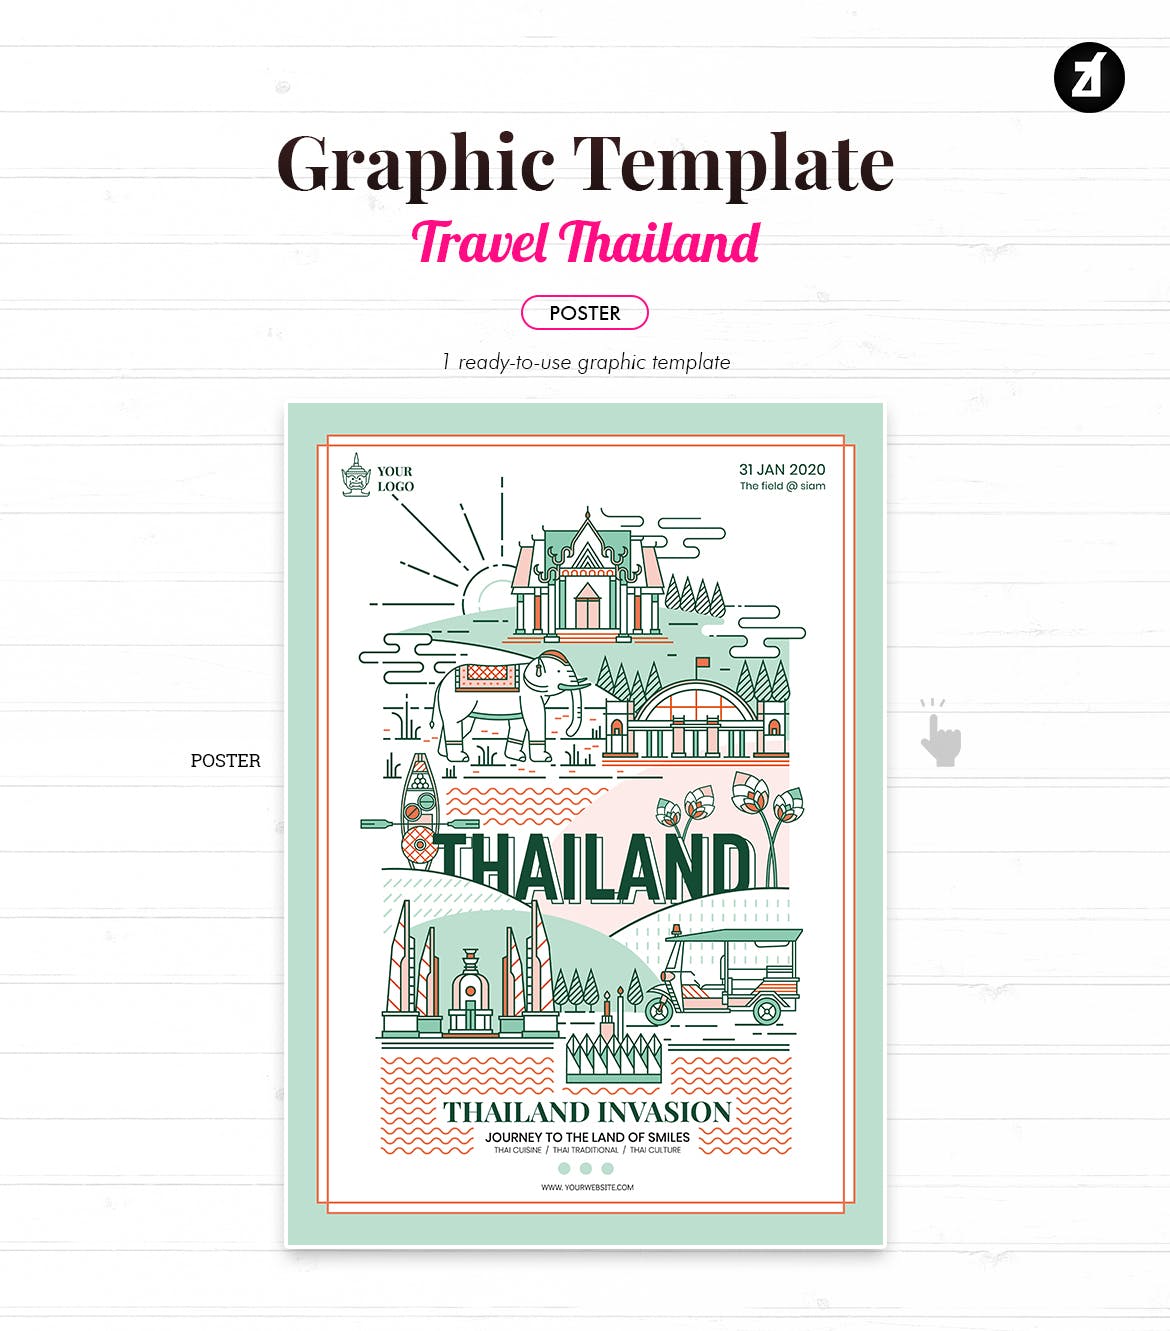 40款泰国地标/元素矢量图标素材 40 Thailand elements with bonus graphic template插图2